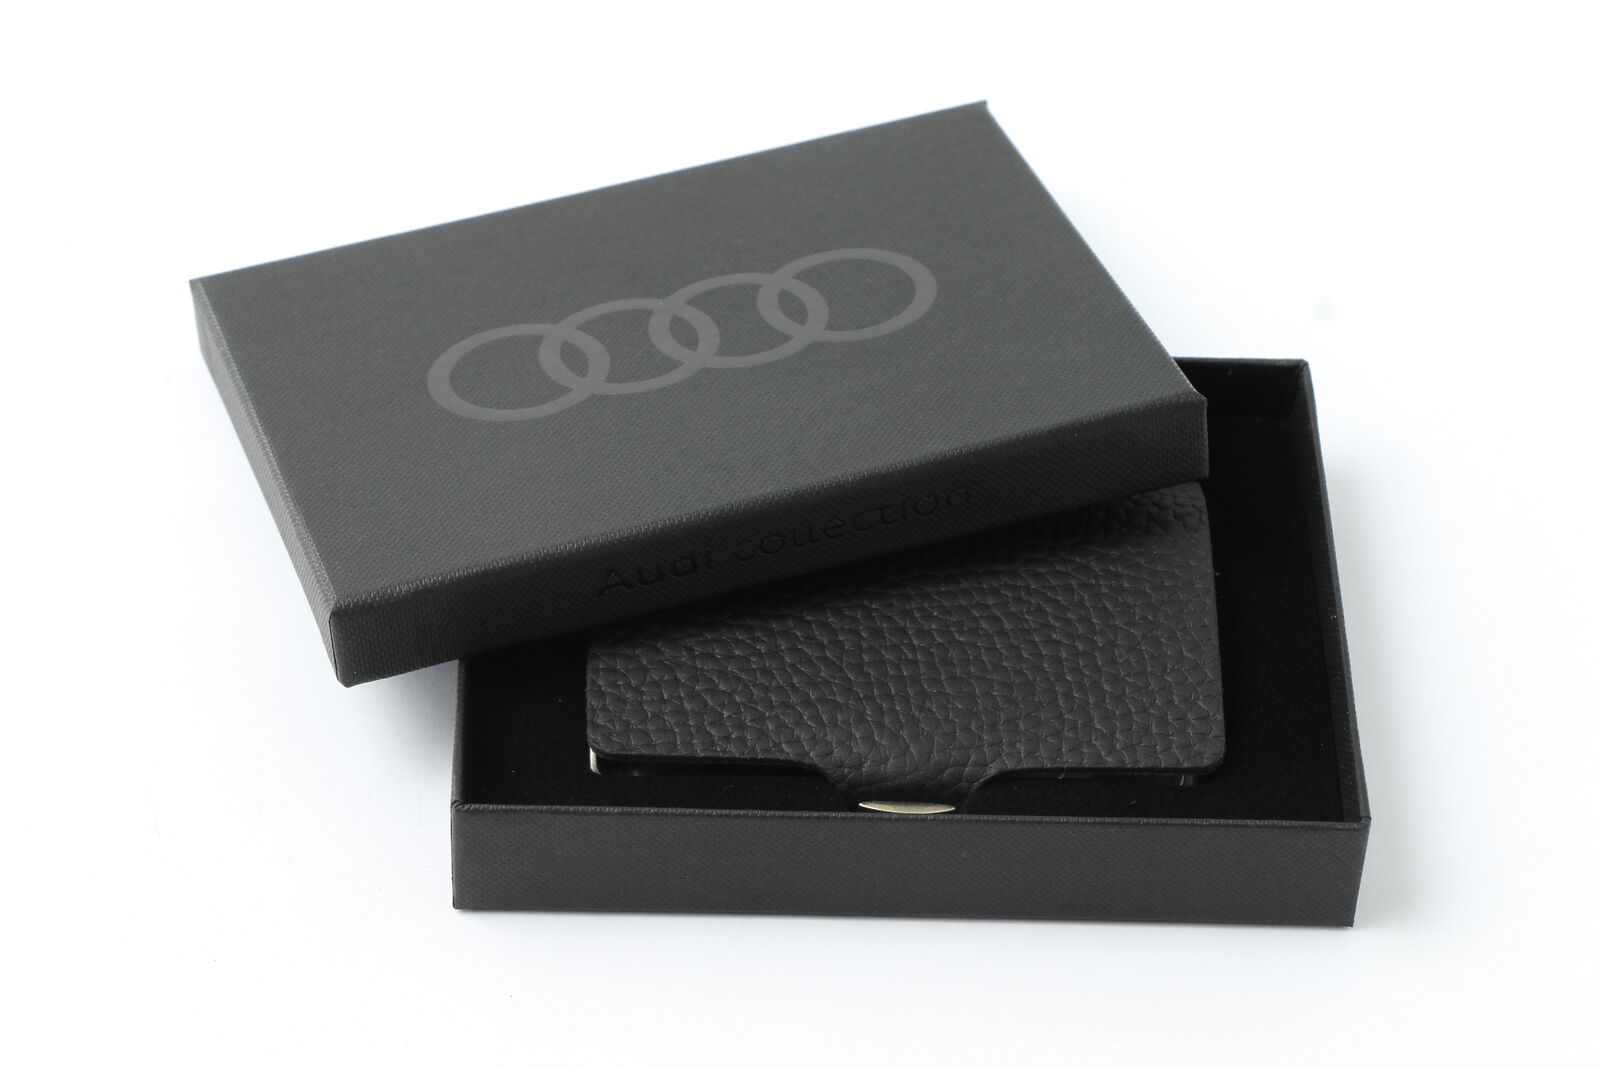 Кошелек Audi I-CLIP the wallet, black/silver 3152000700